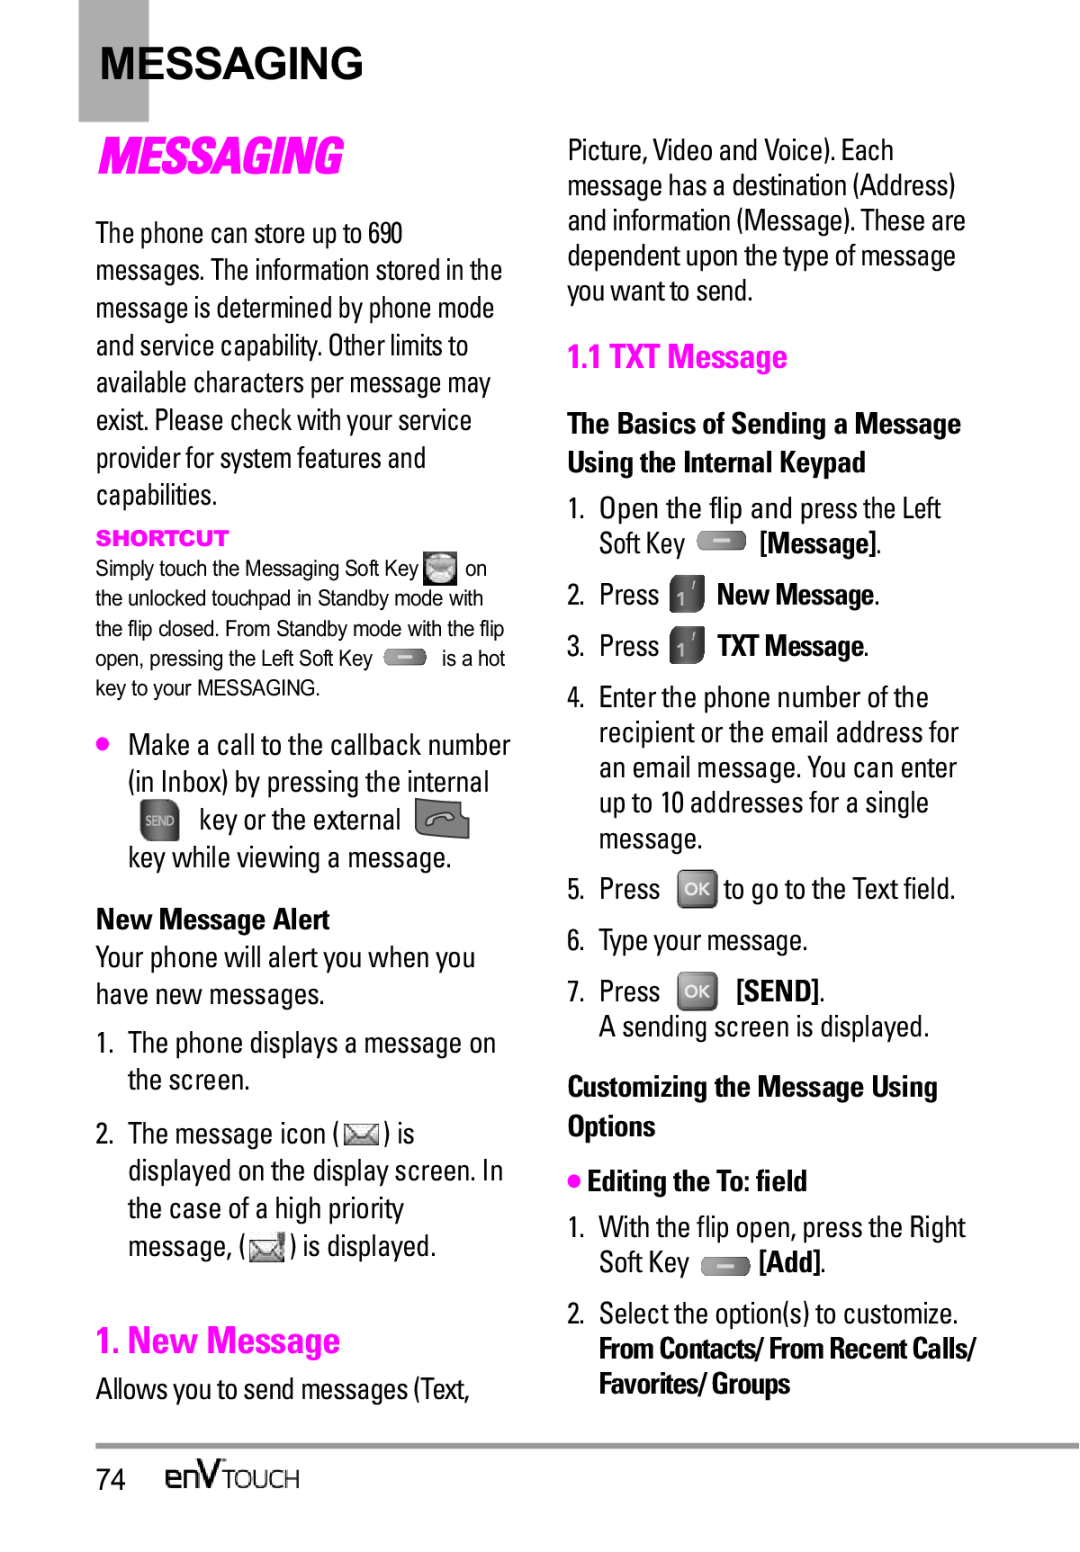 LG Electronics MMBB0332901 manual Messaging, New Message Alert, Press New Message 3. Press TXT Message, Shortcut 